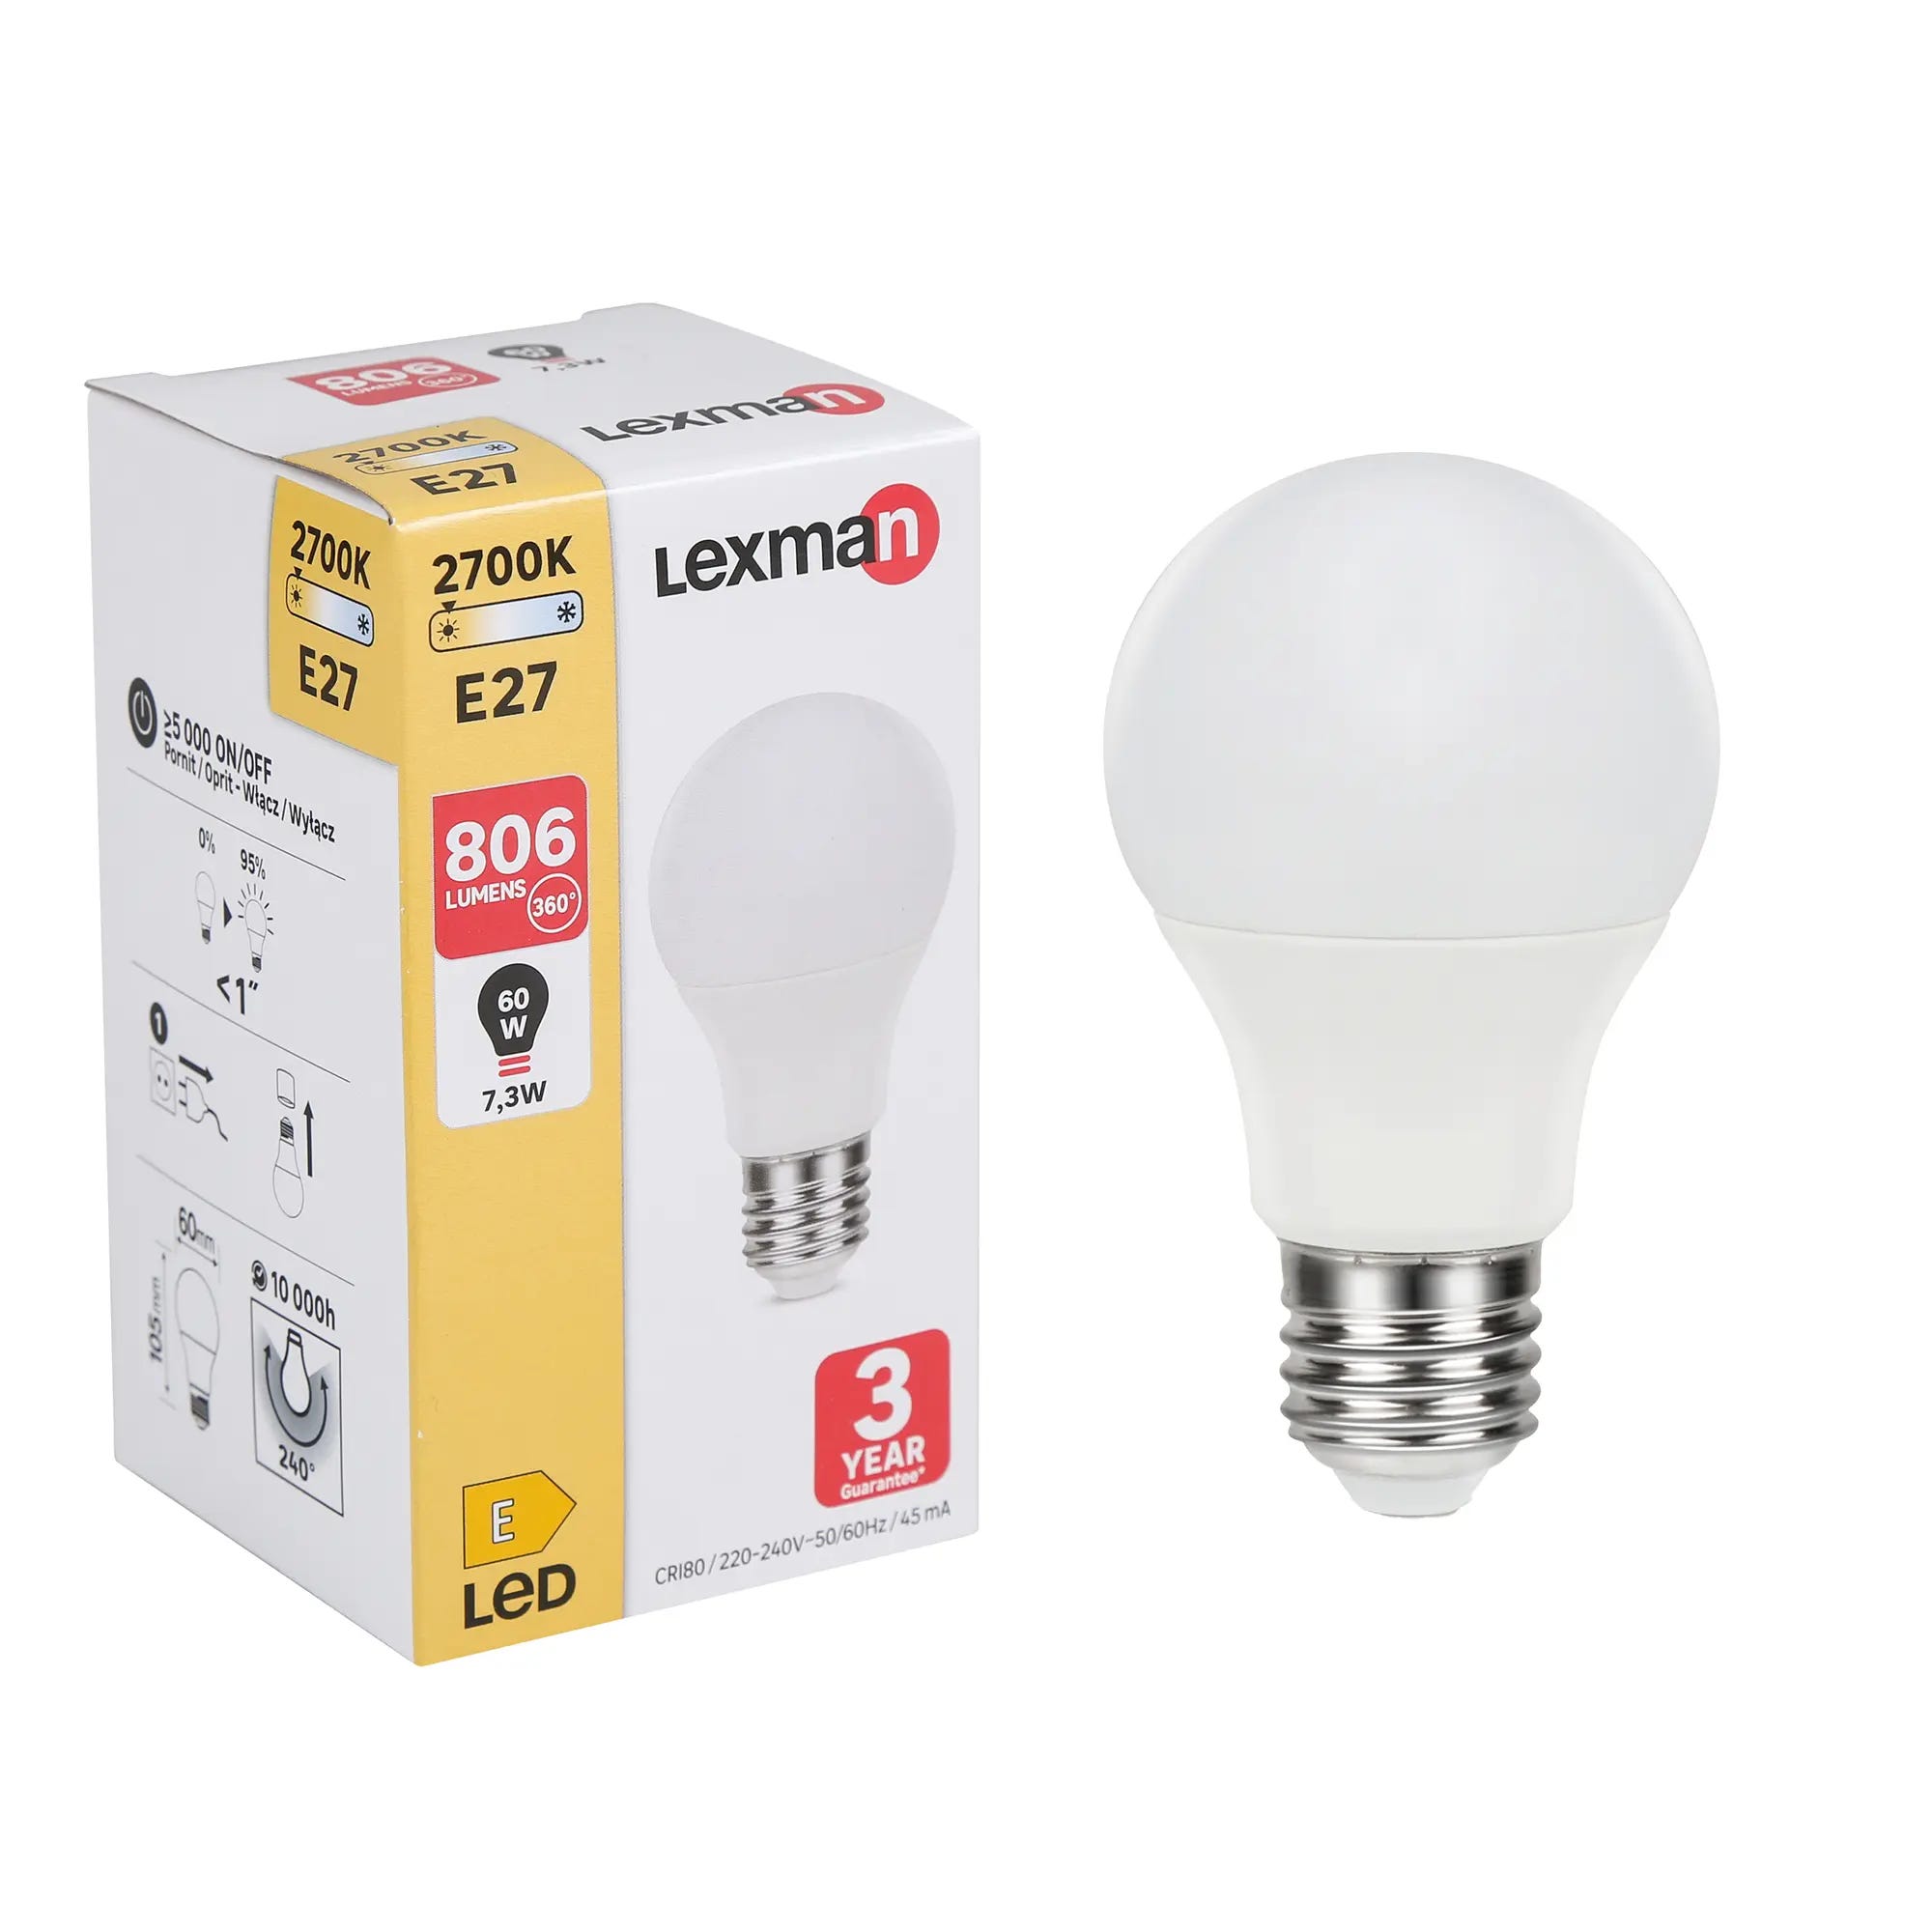 Ampoule led E27, 806Lm = 60W, blanc chaud, LEXMAN